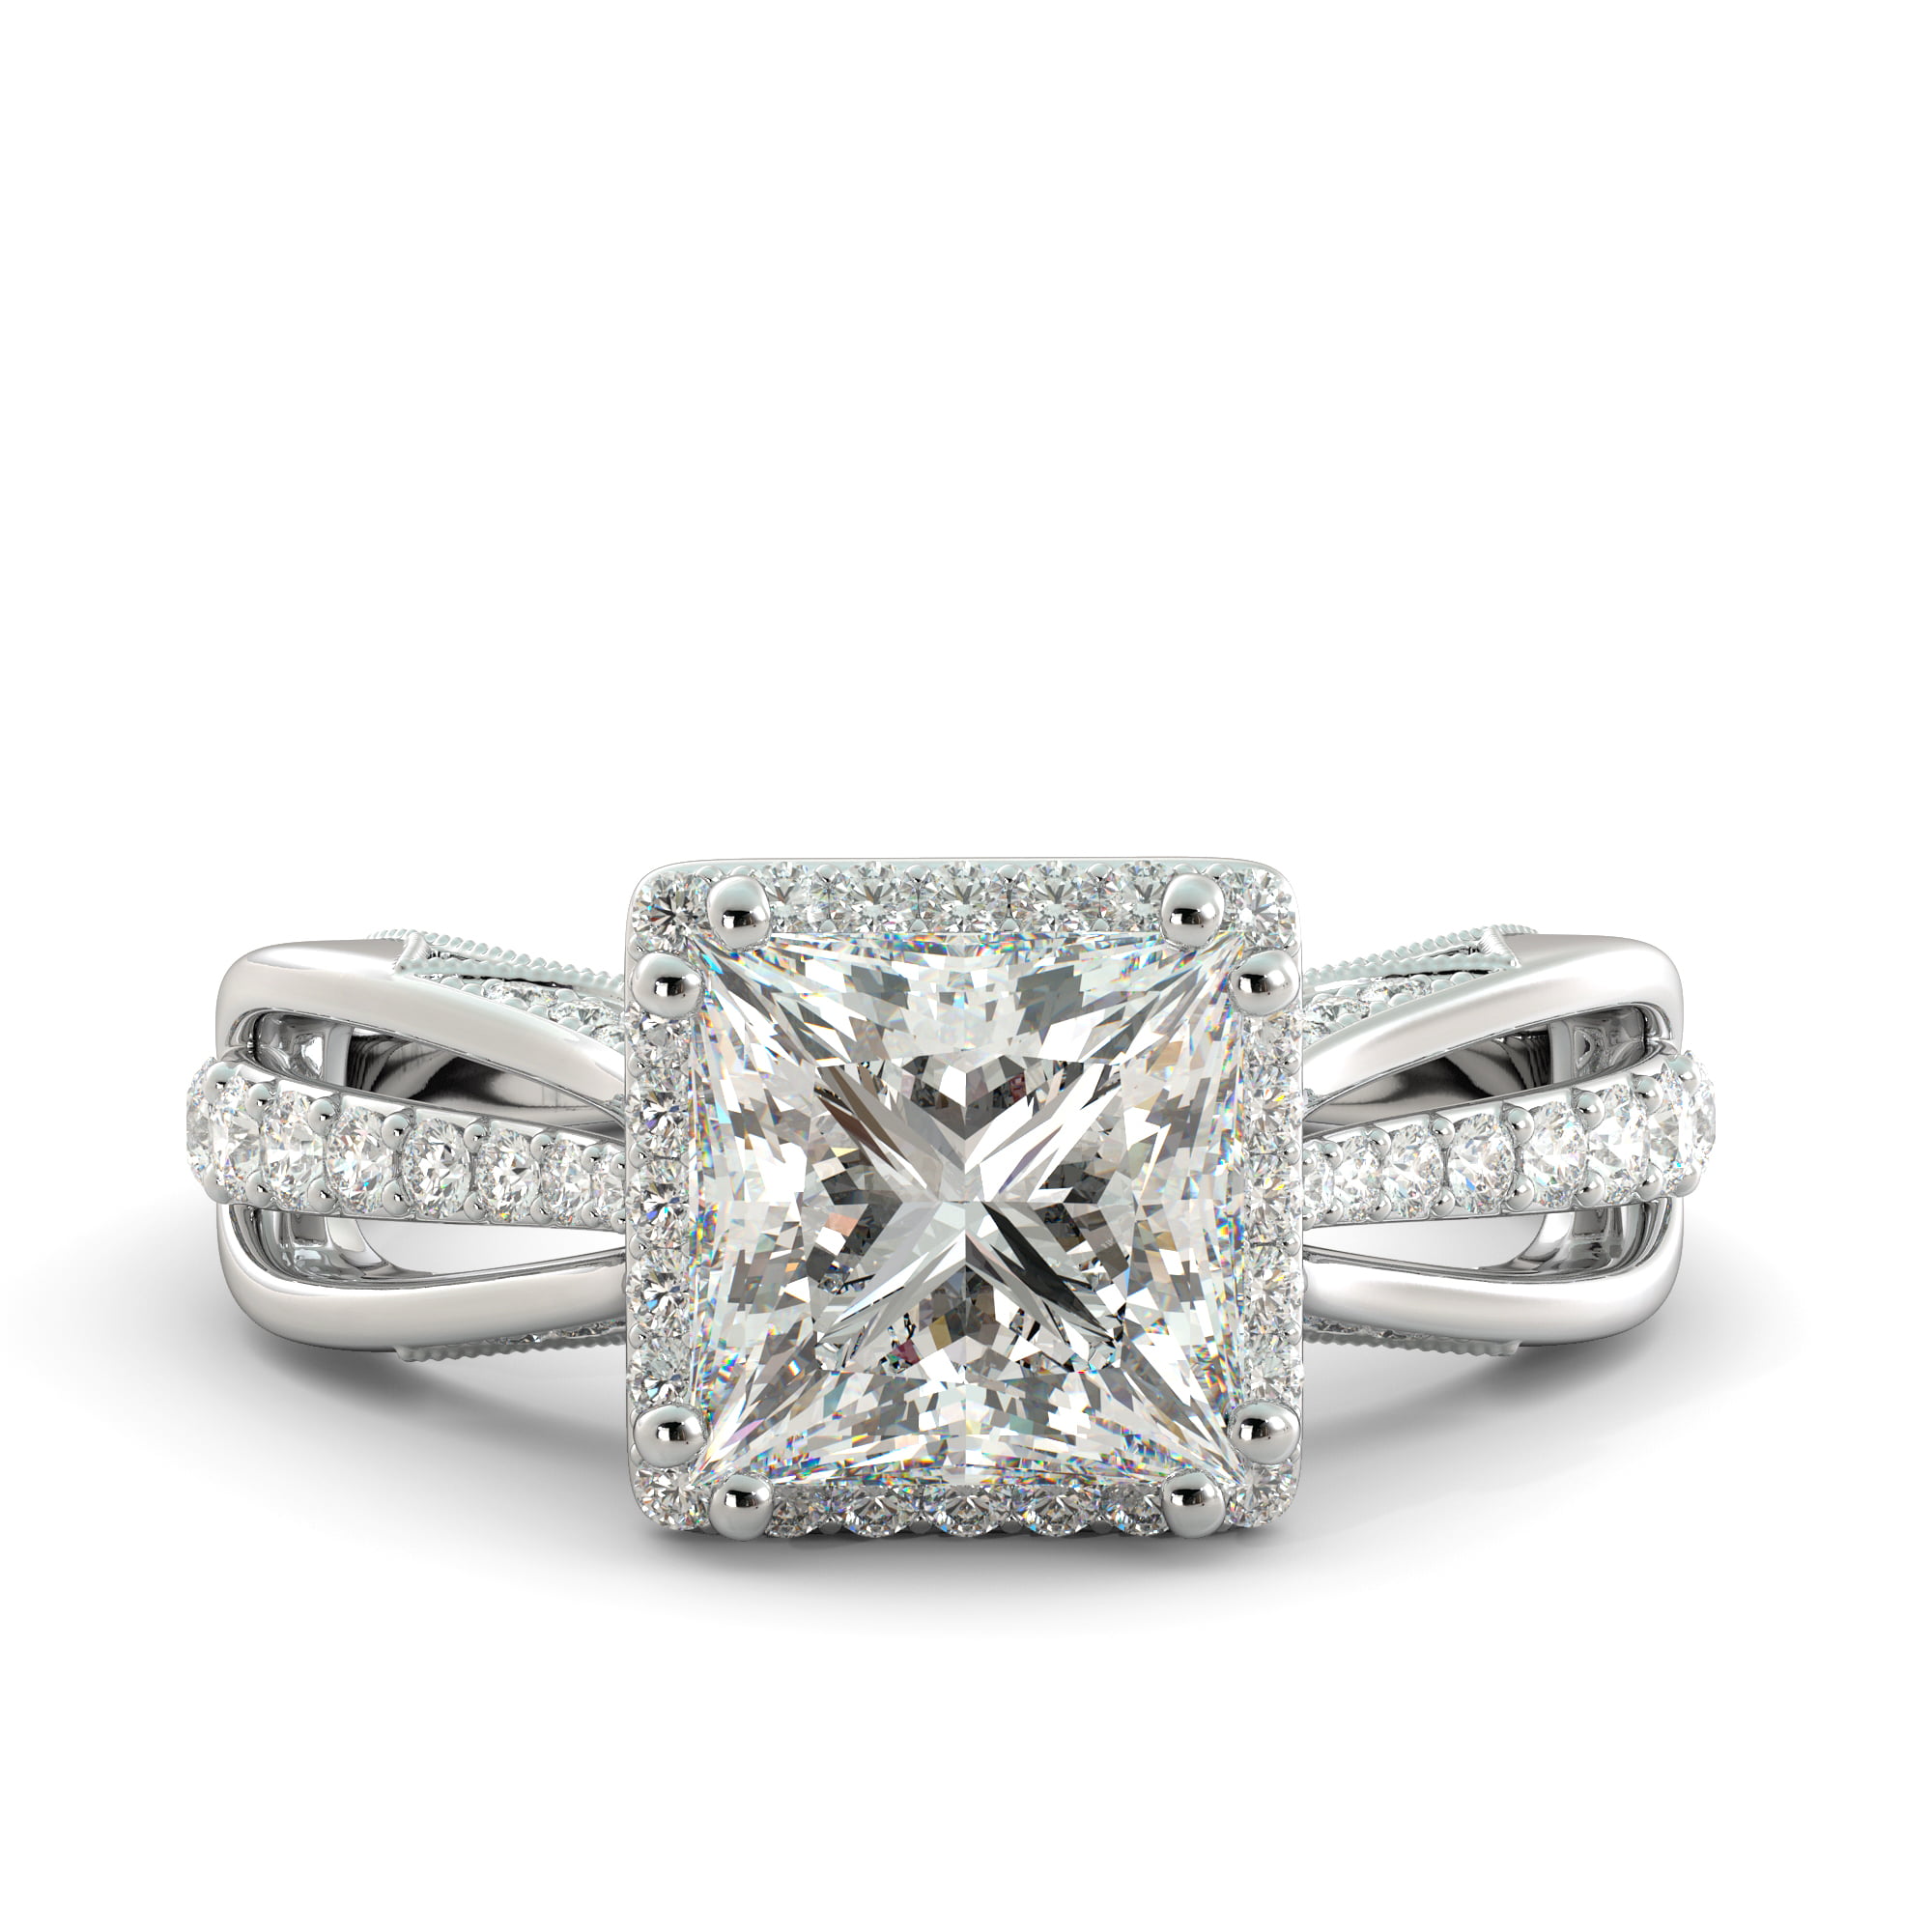 3.25 CT Princess Cut Diamond Engagement Wedding Ring 14k Solid White Gold 